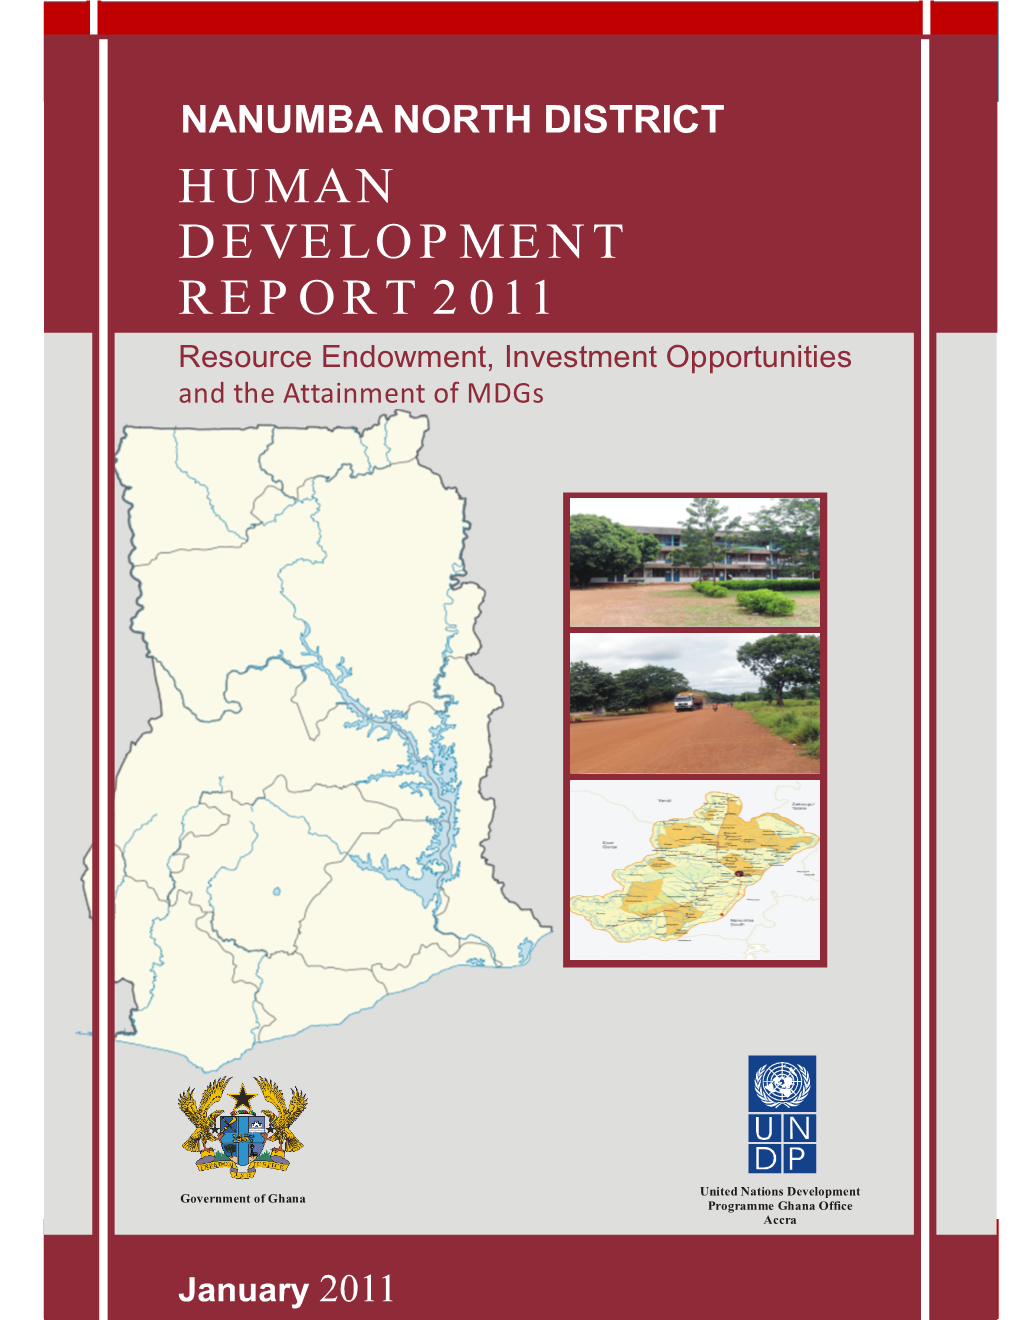 Nanumba North District Human Development Report 2011